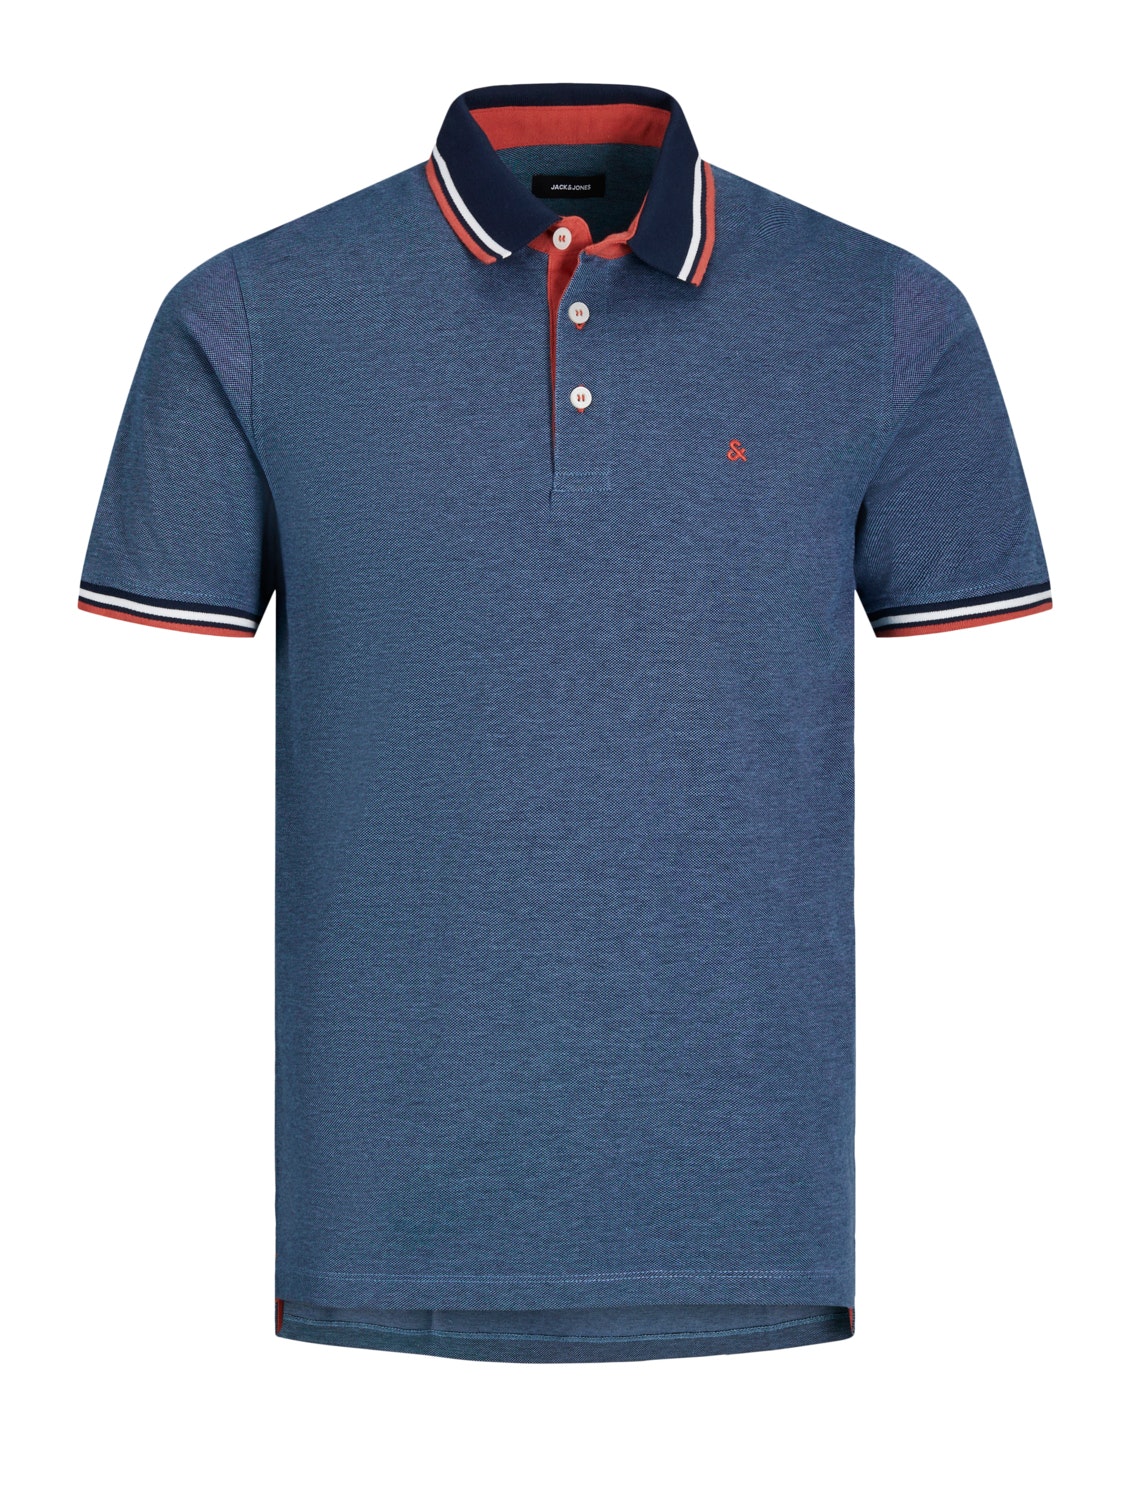 Jack & Jones Mens Polo Shirt Short Sleeve Classic Slim Fit Tee Tops | eBay